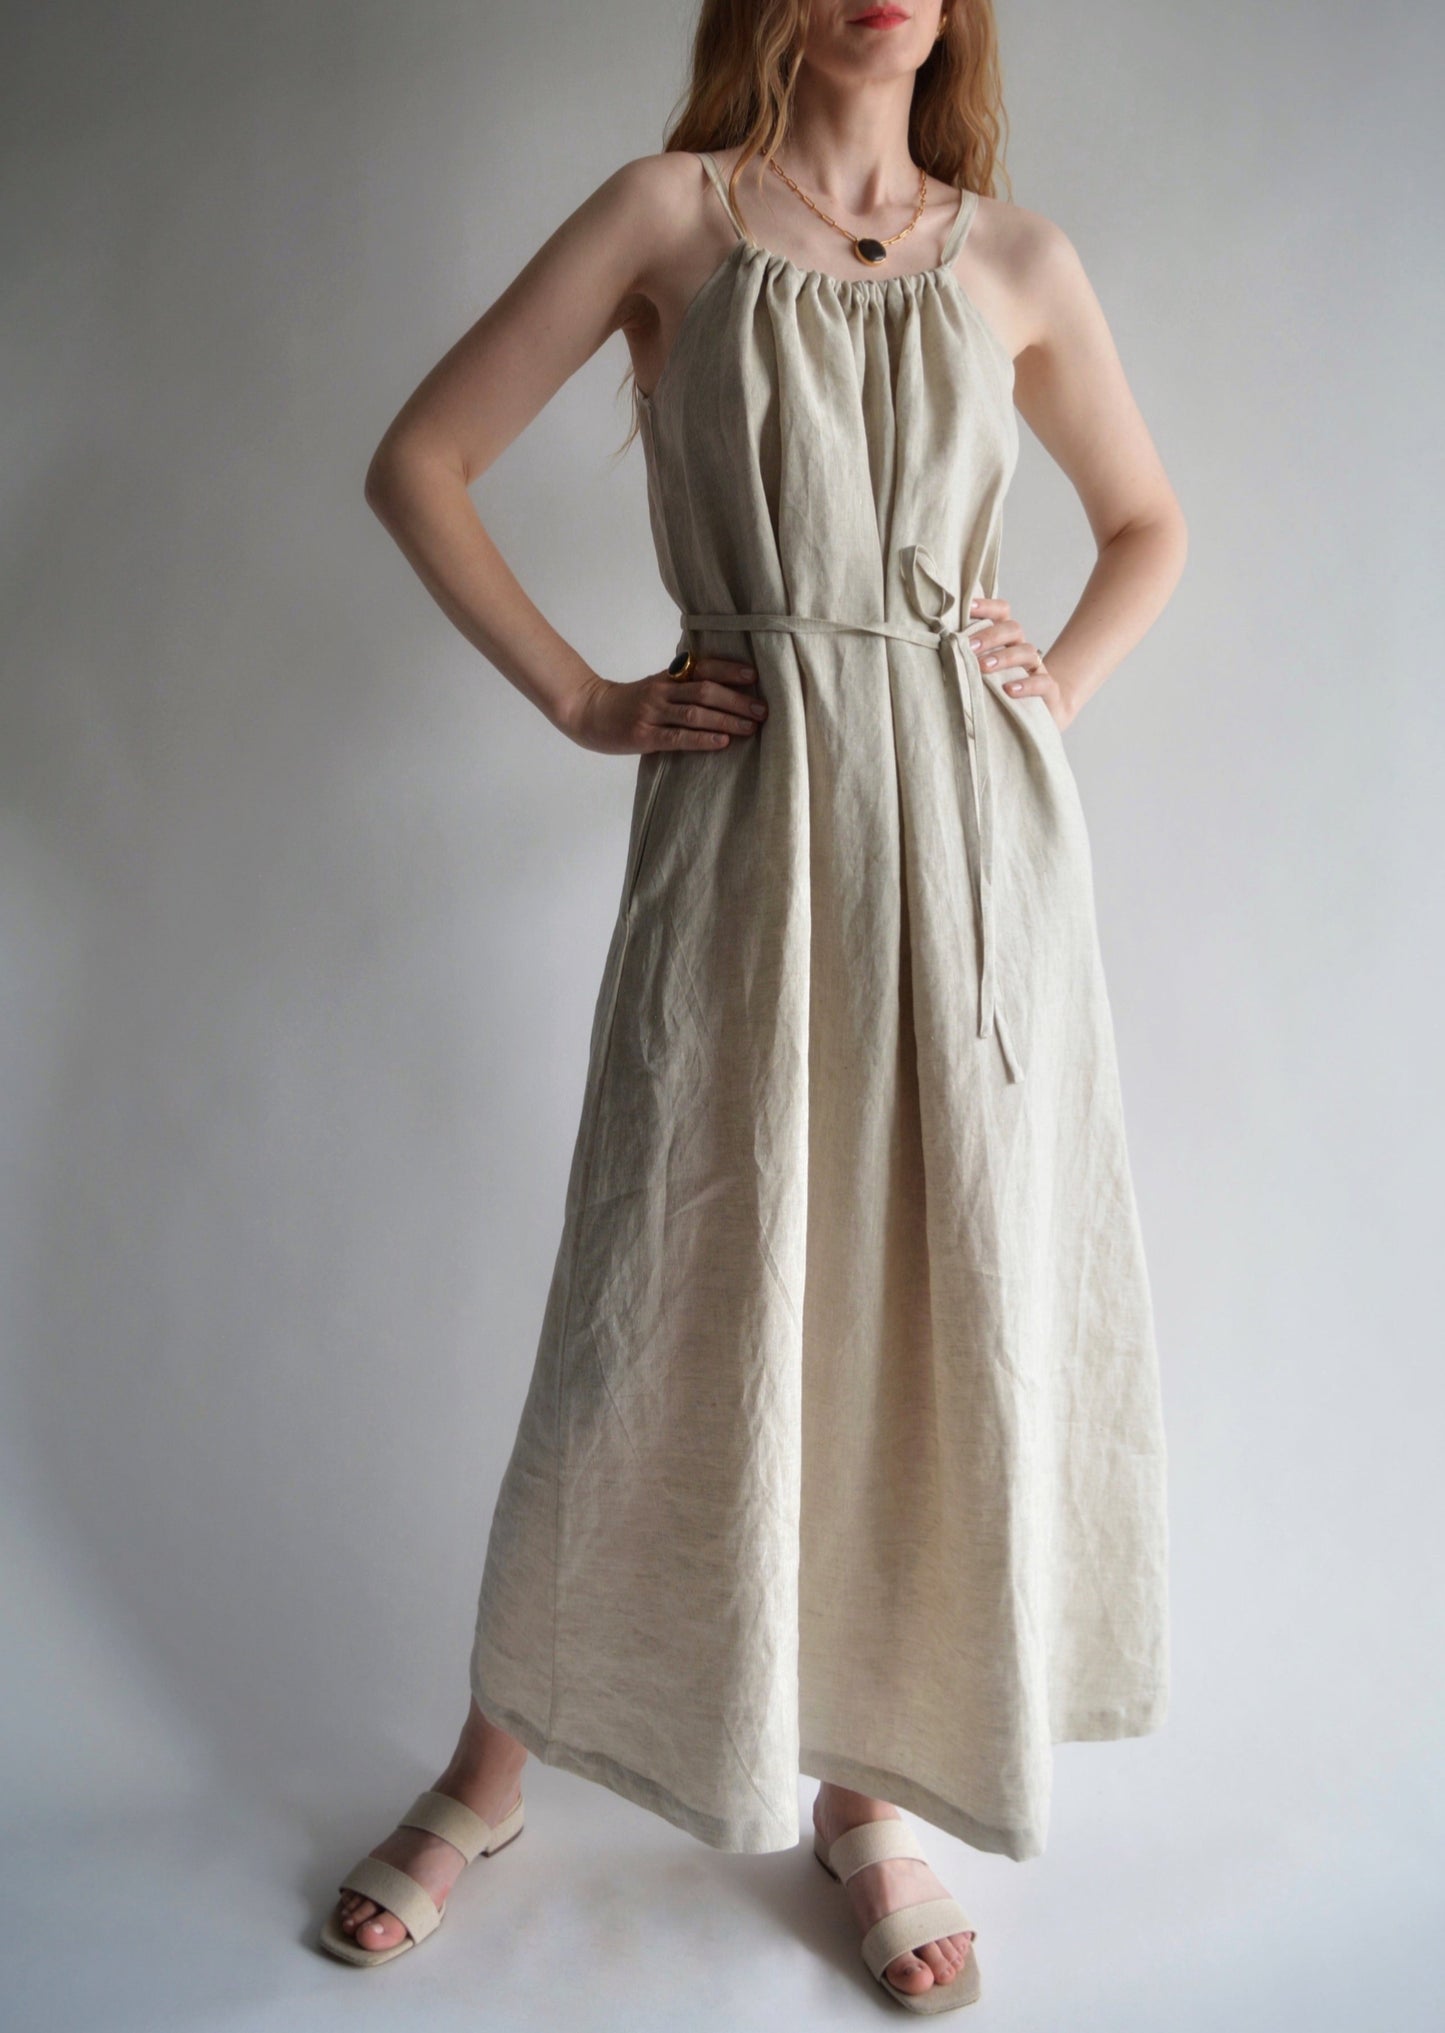 Linen Dress in natural color 